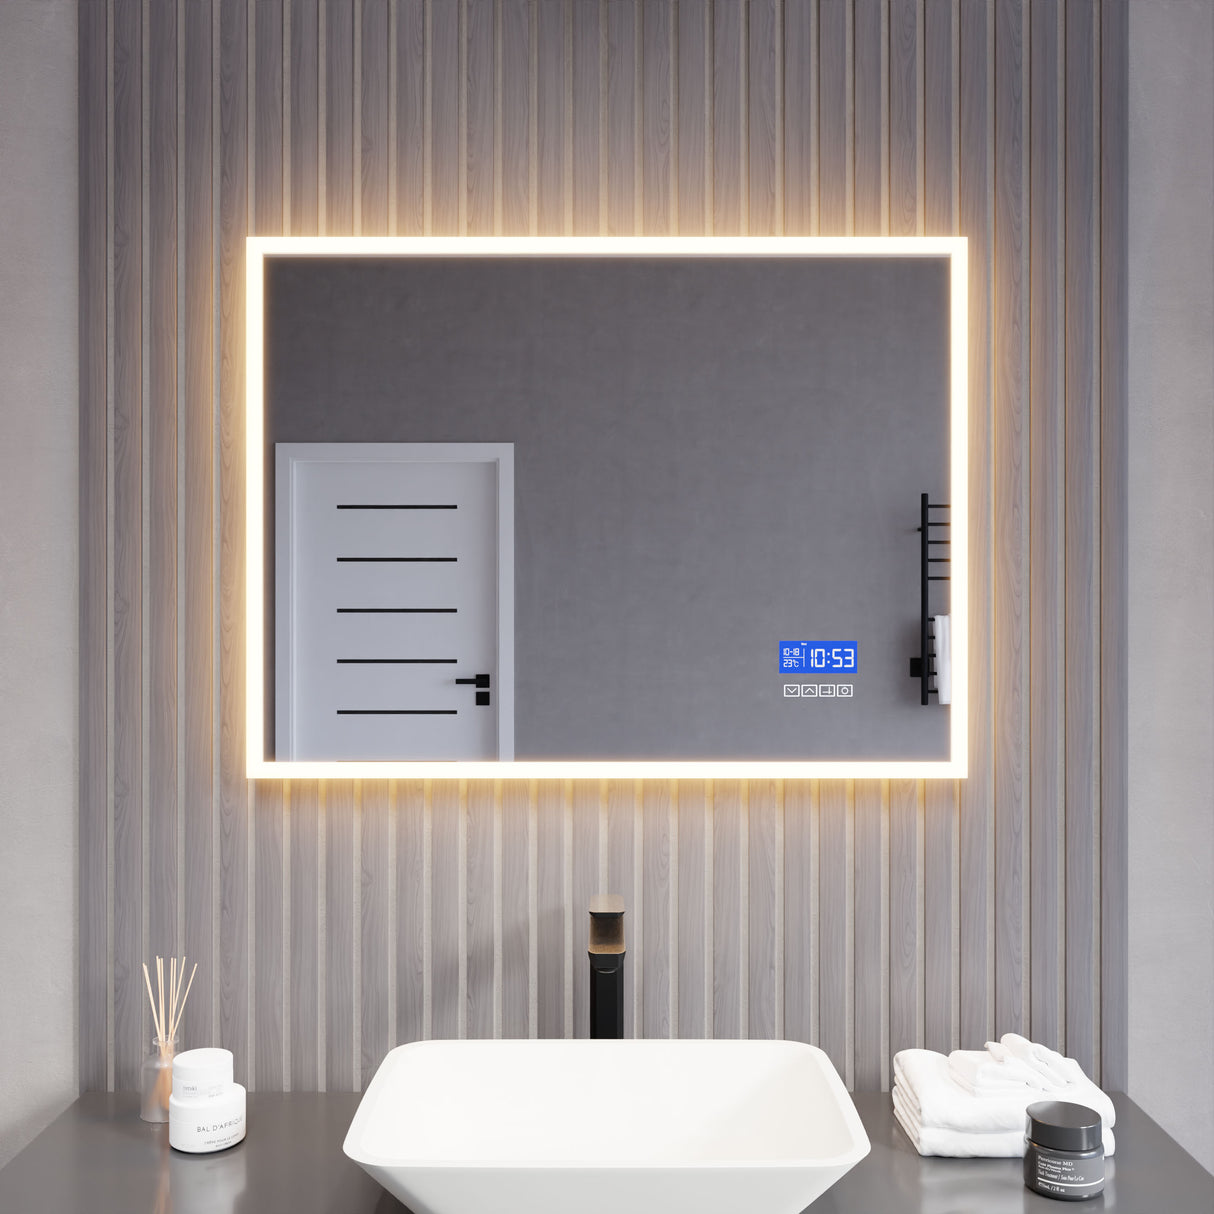 ANZZI BA-LMDFX012AL 24-in. x 31-in. LED Front/Back Light Magnifying Bathroom Mirror w/Defogger